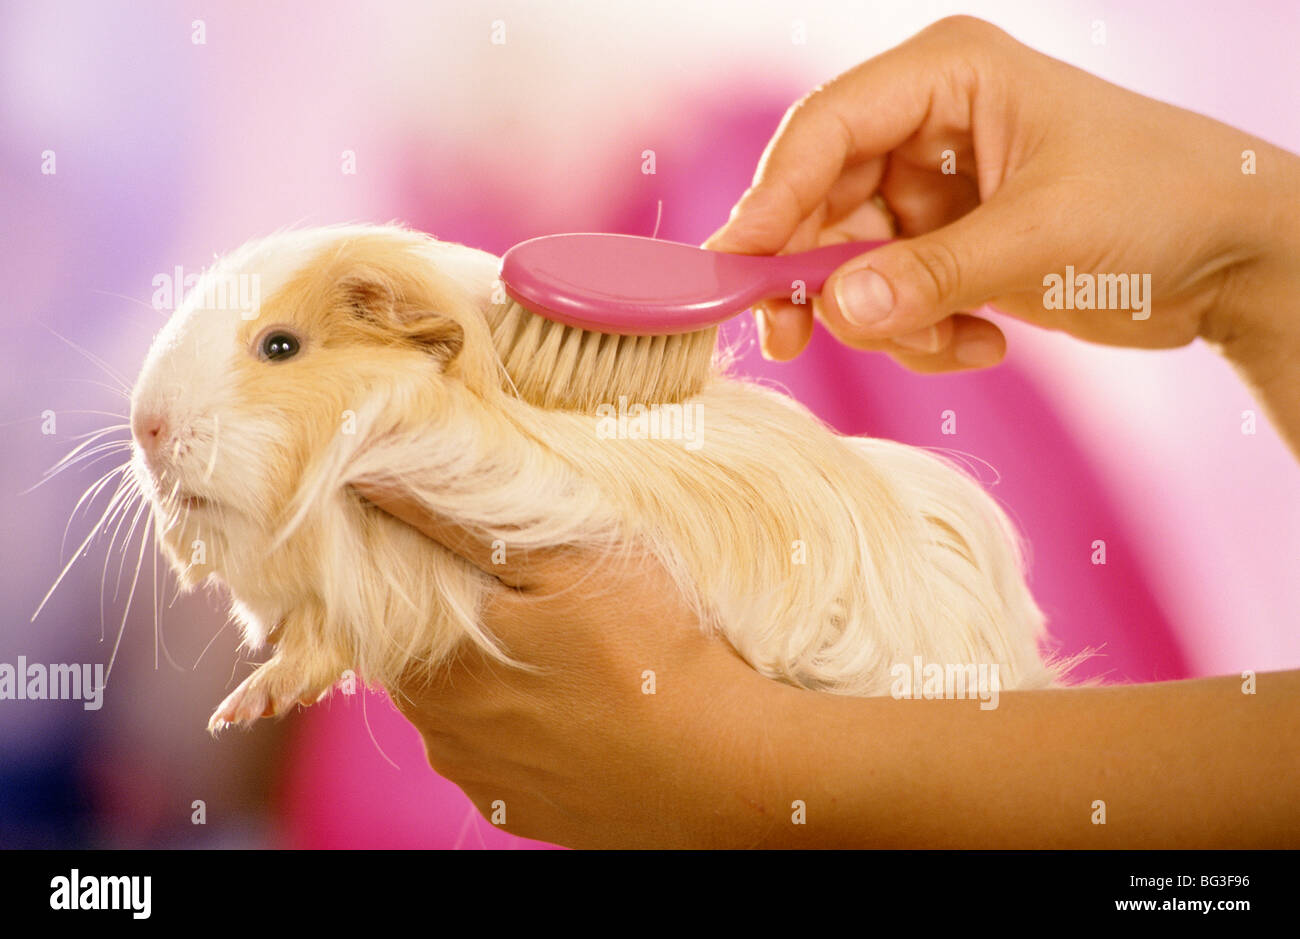 Sheltie guinea pig being brushed Stock Photo